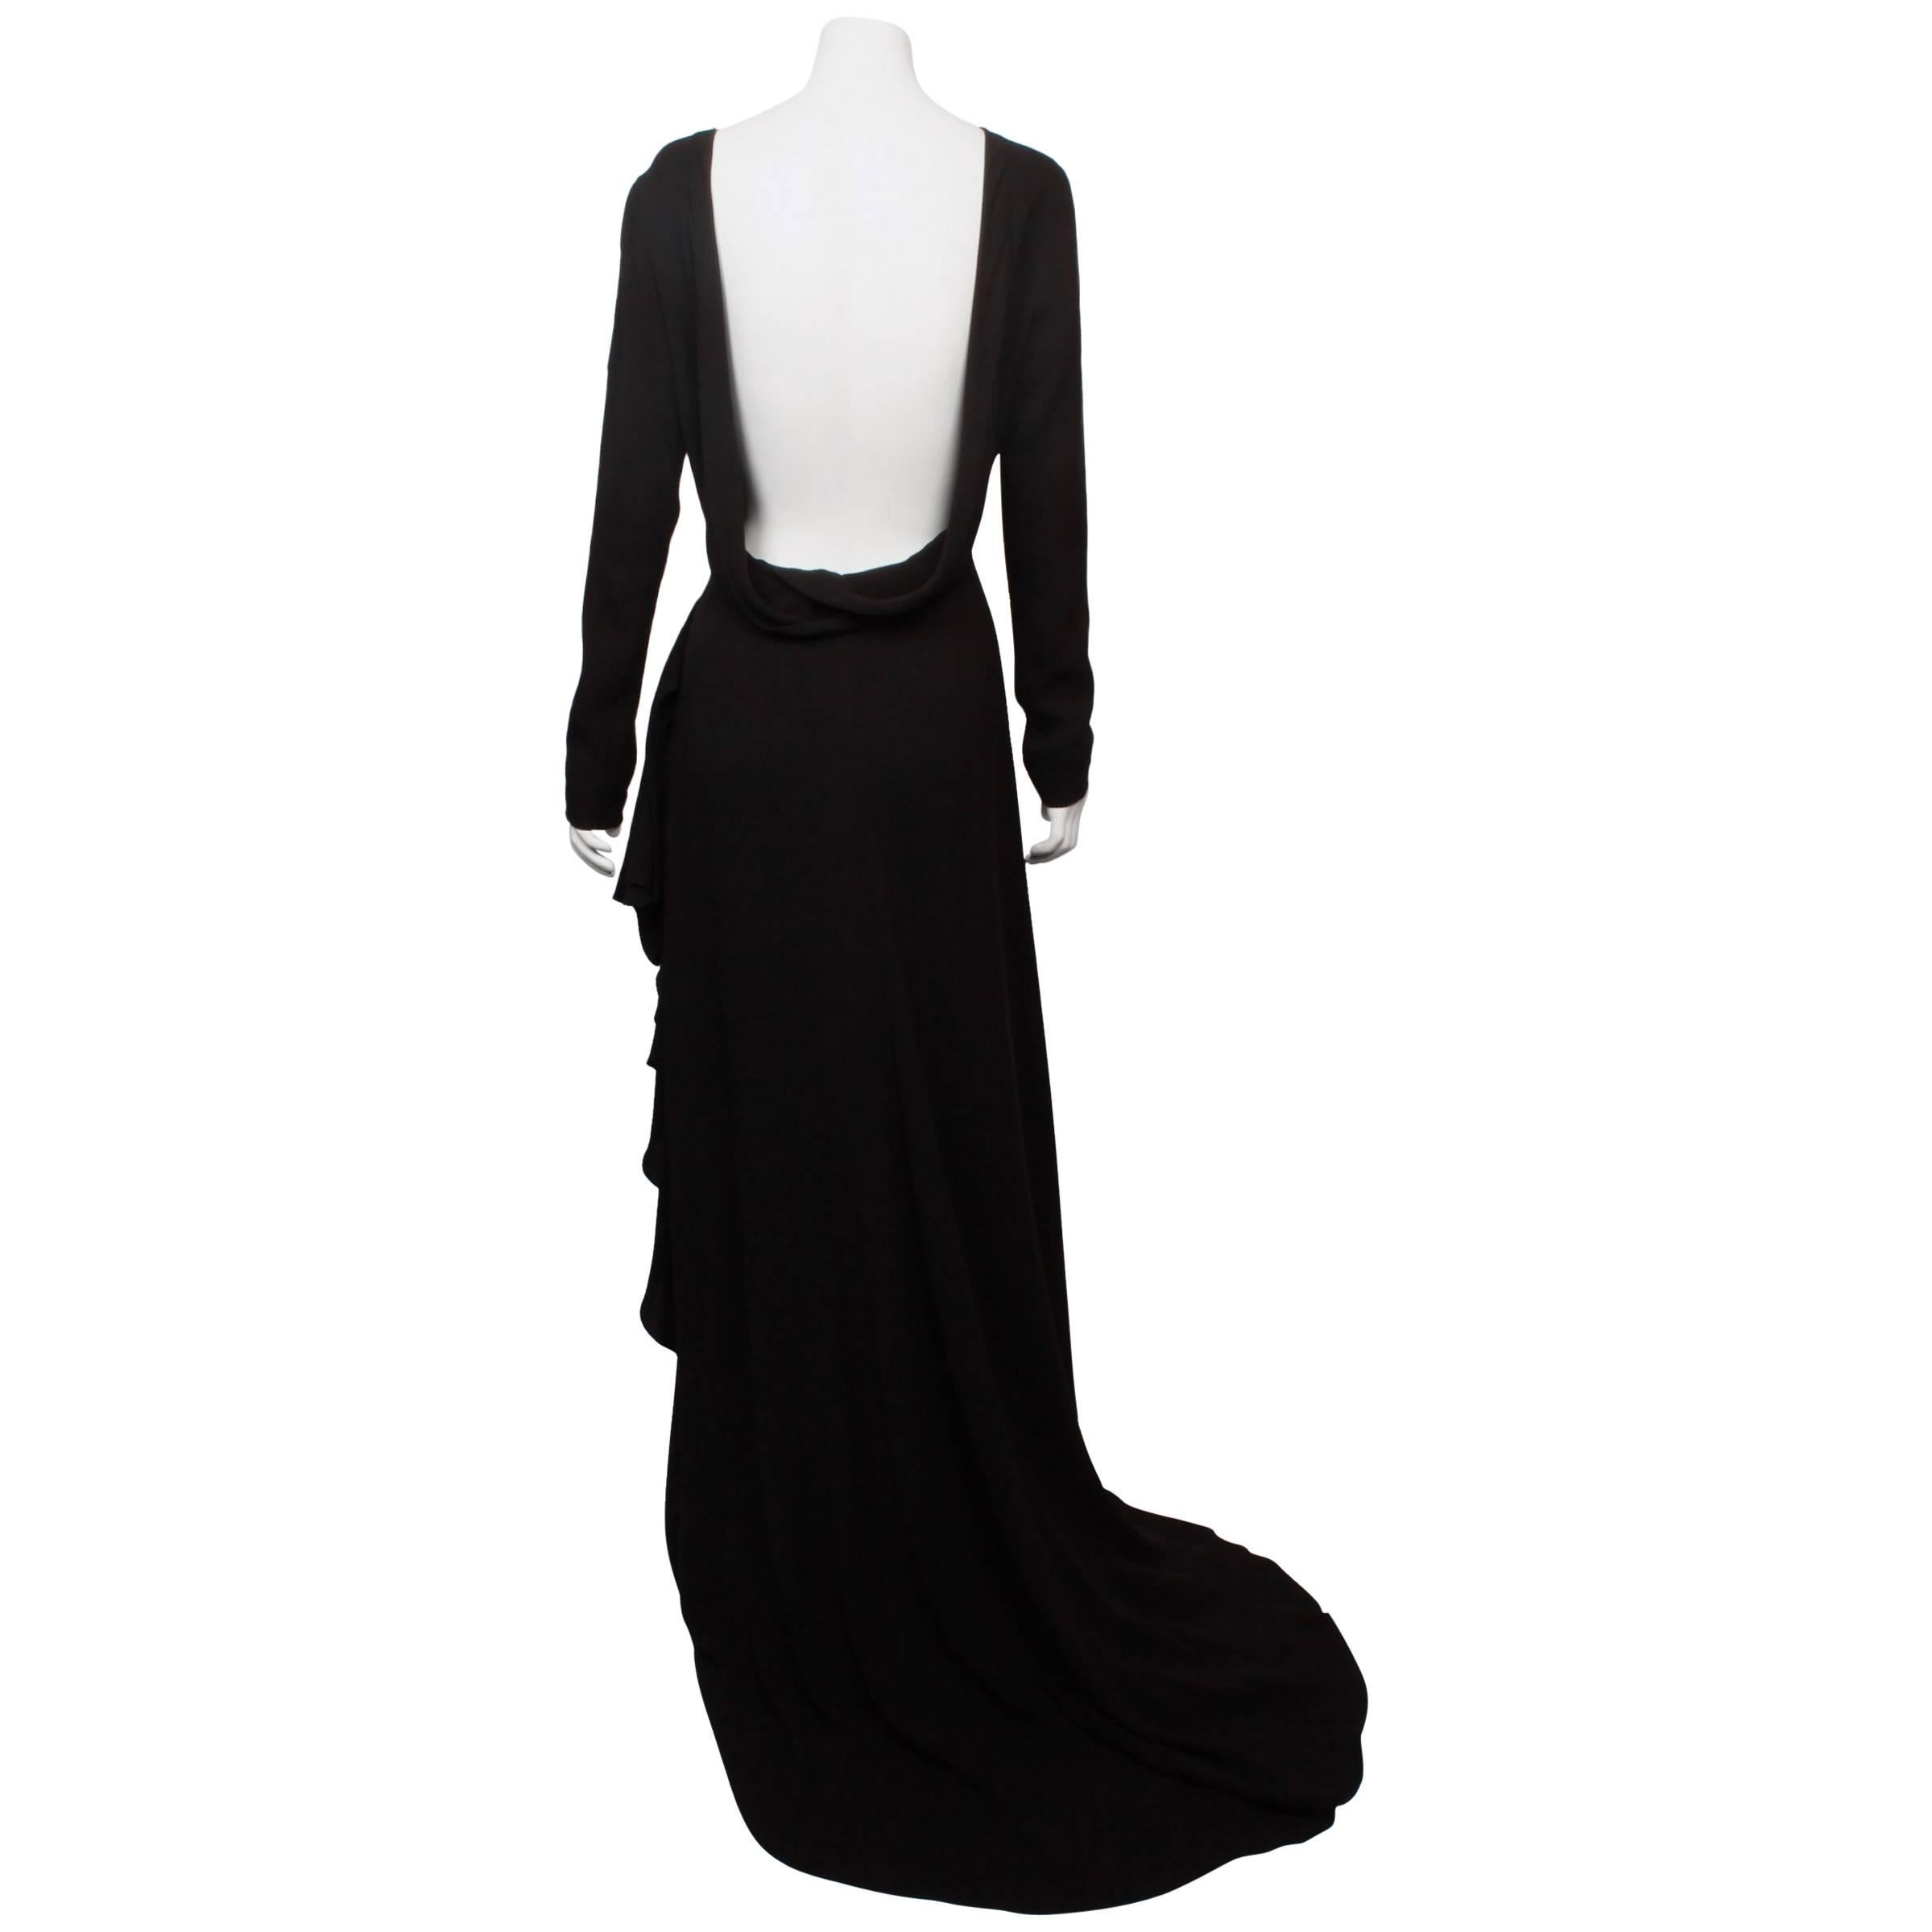 Black Maxi Dress - Long Sleeve Dress - Cutout Backless Dress - Lulus